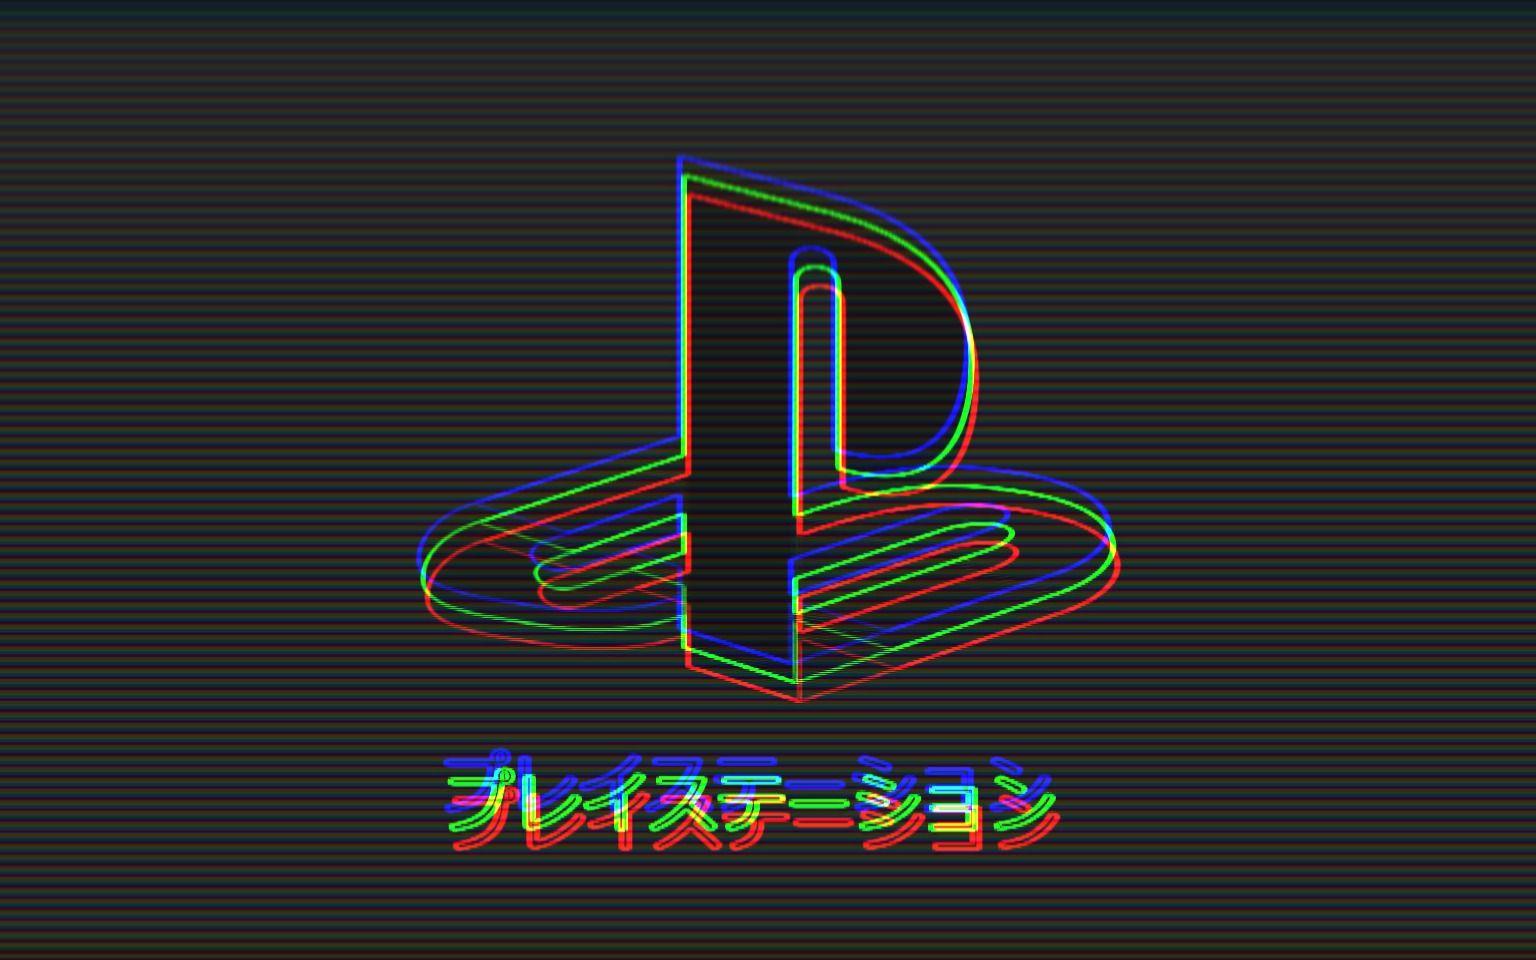 PlayStation. Sparkle wallpaper, Glitch art, Chinese logo